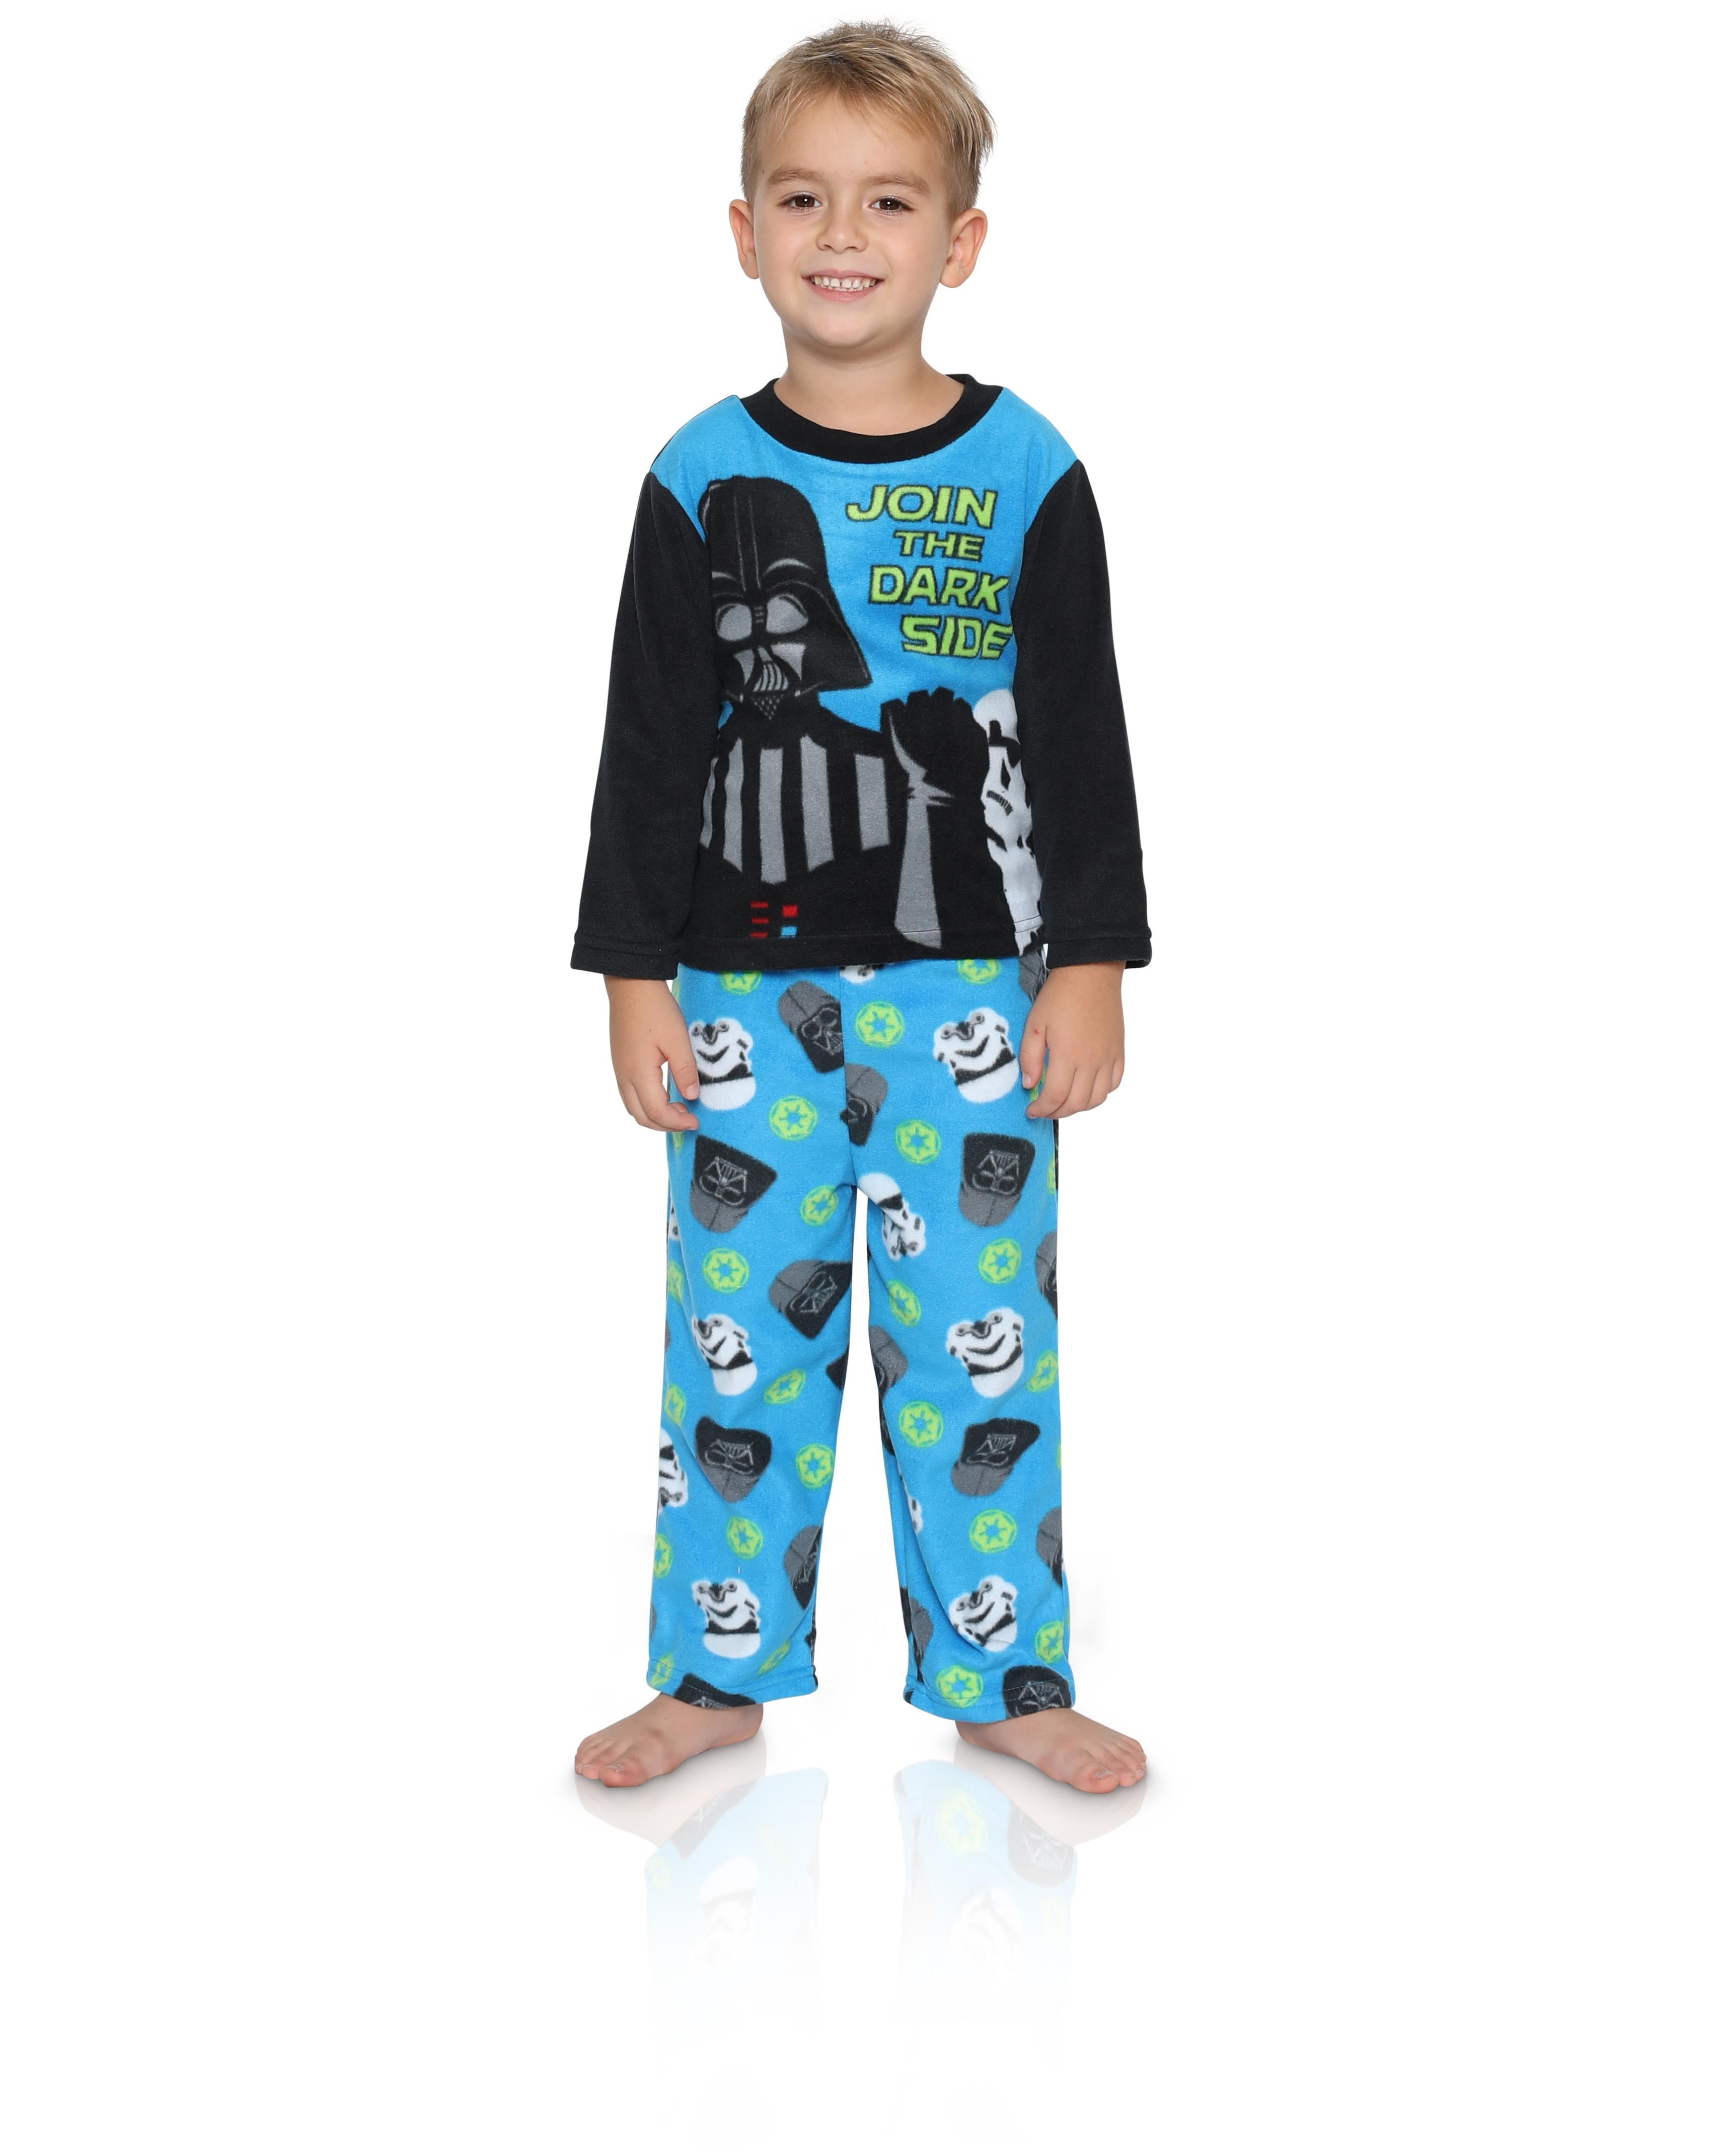 LEGO Star Wars Boys Robe with Slippers,Darth Vader Bathrobe Pajama Set,Boys Size 4//5 to 10//12